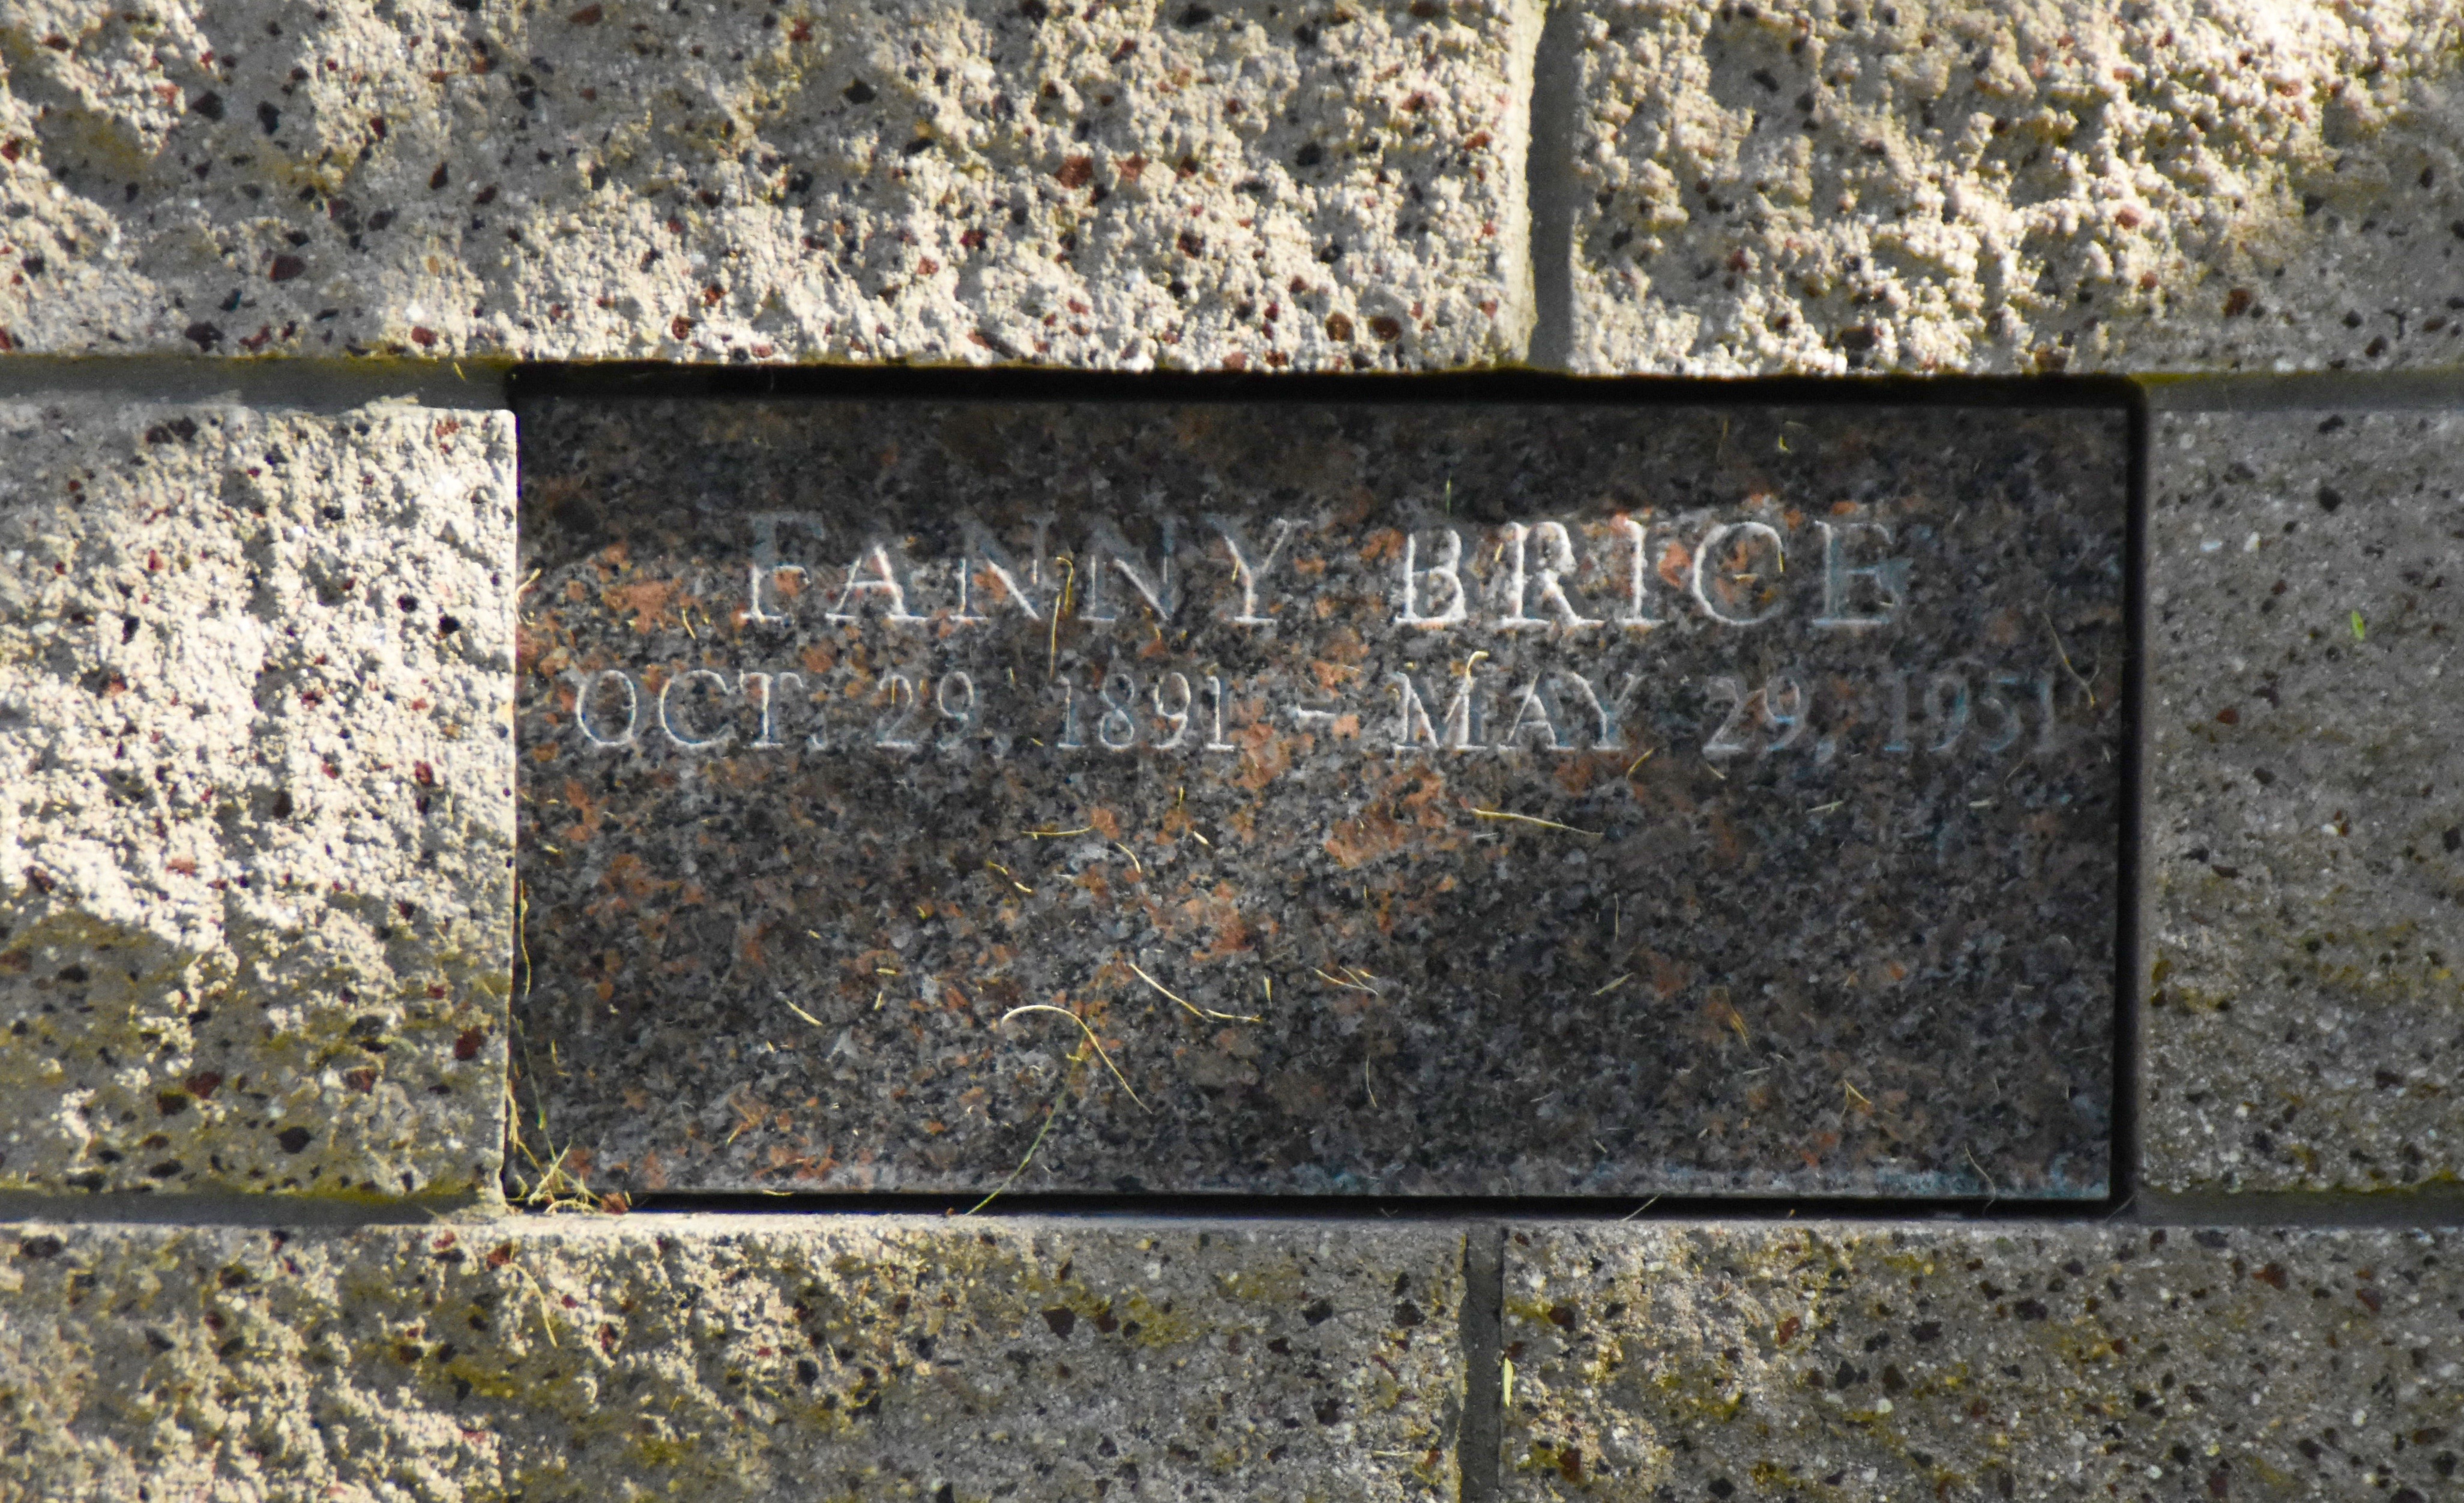 Fanny Brice, Westwood Village Cemetery